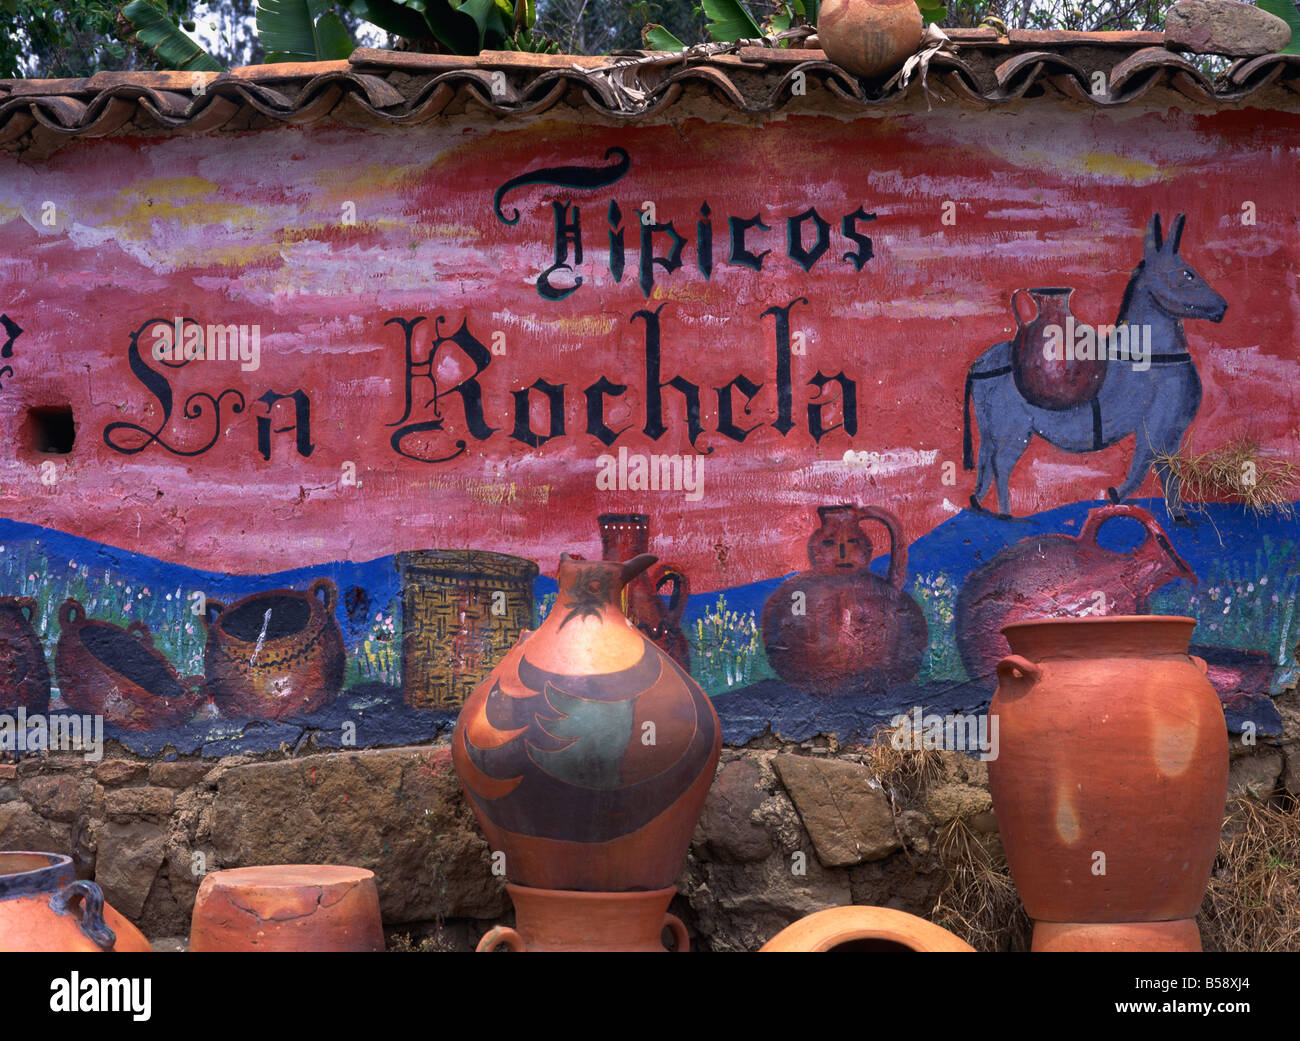 Wandmalereien, Raqira, in der Nähe von Villa de Leyva, Boyaca Region, Kolumbien, Südamerika Stockfoto